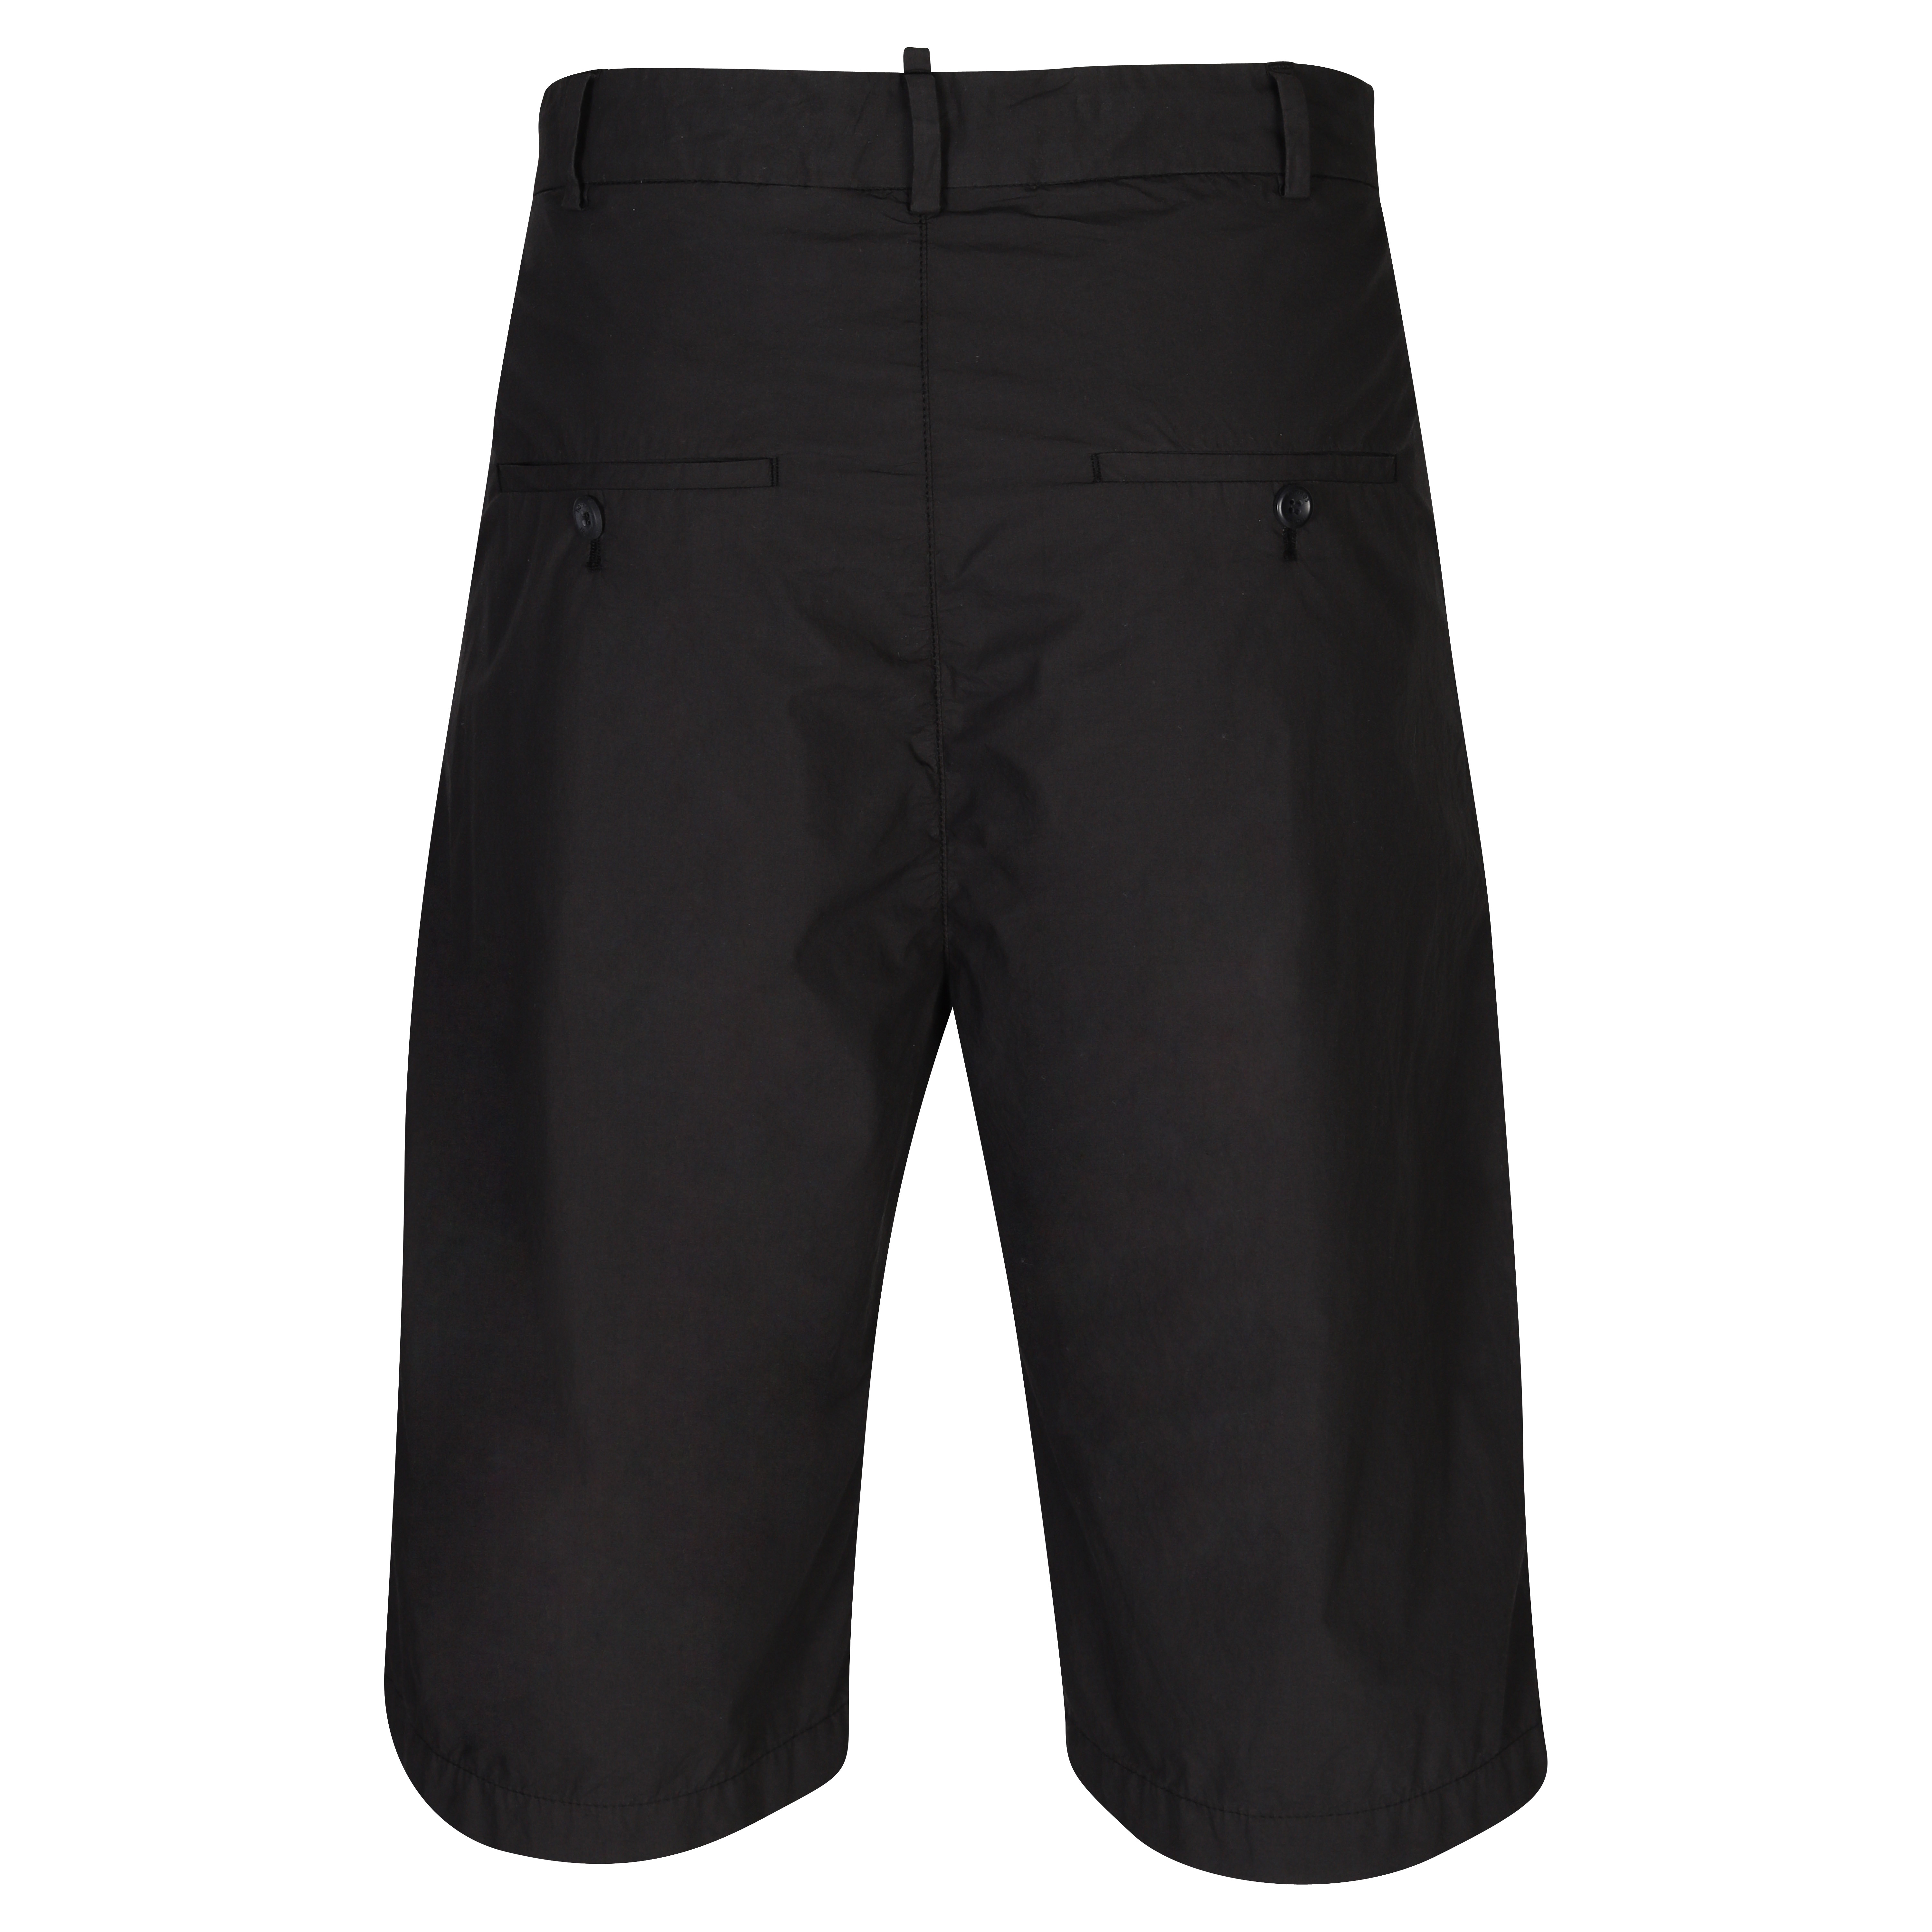 Hannes Roether Bermuda Shorts in Black